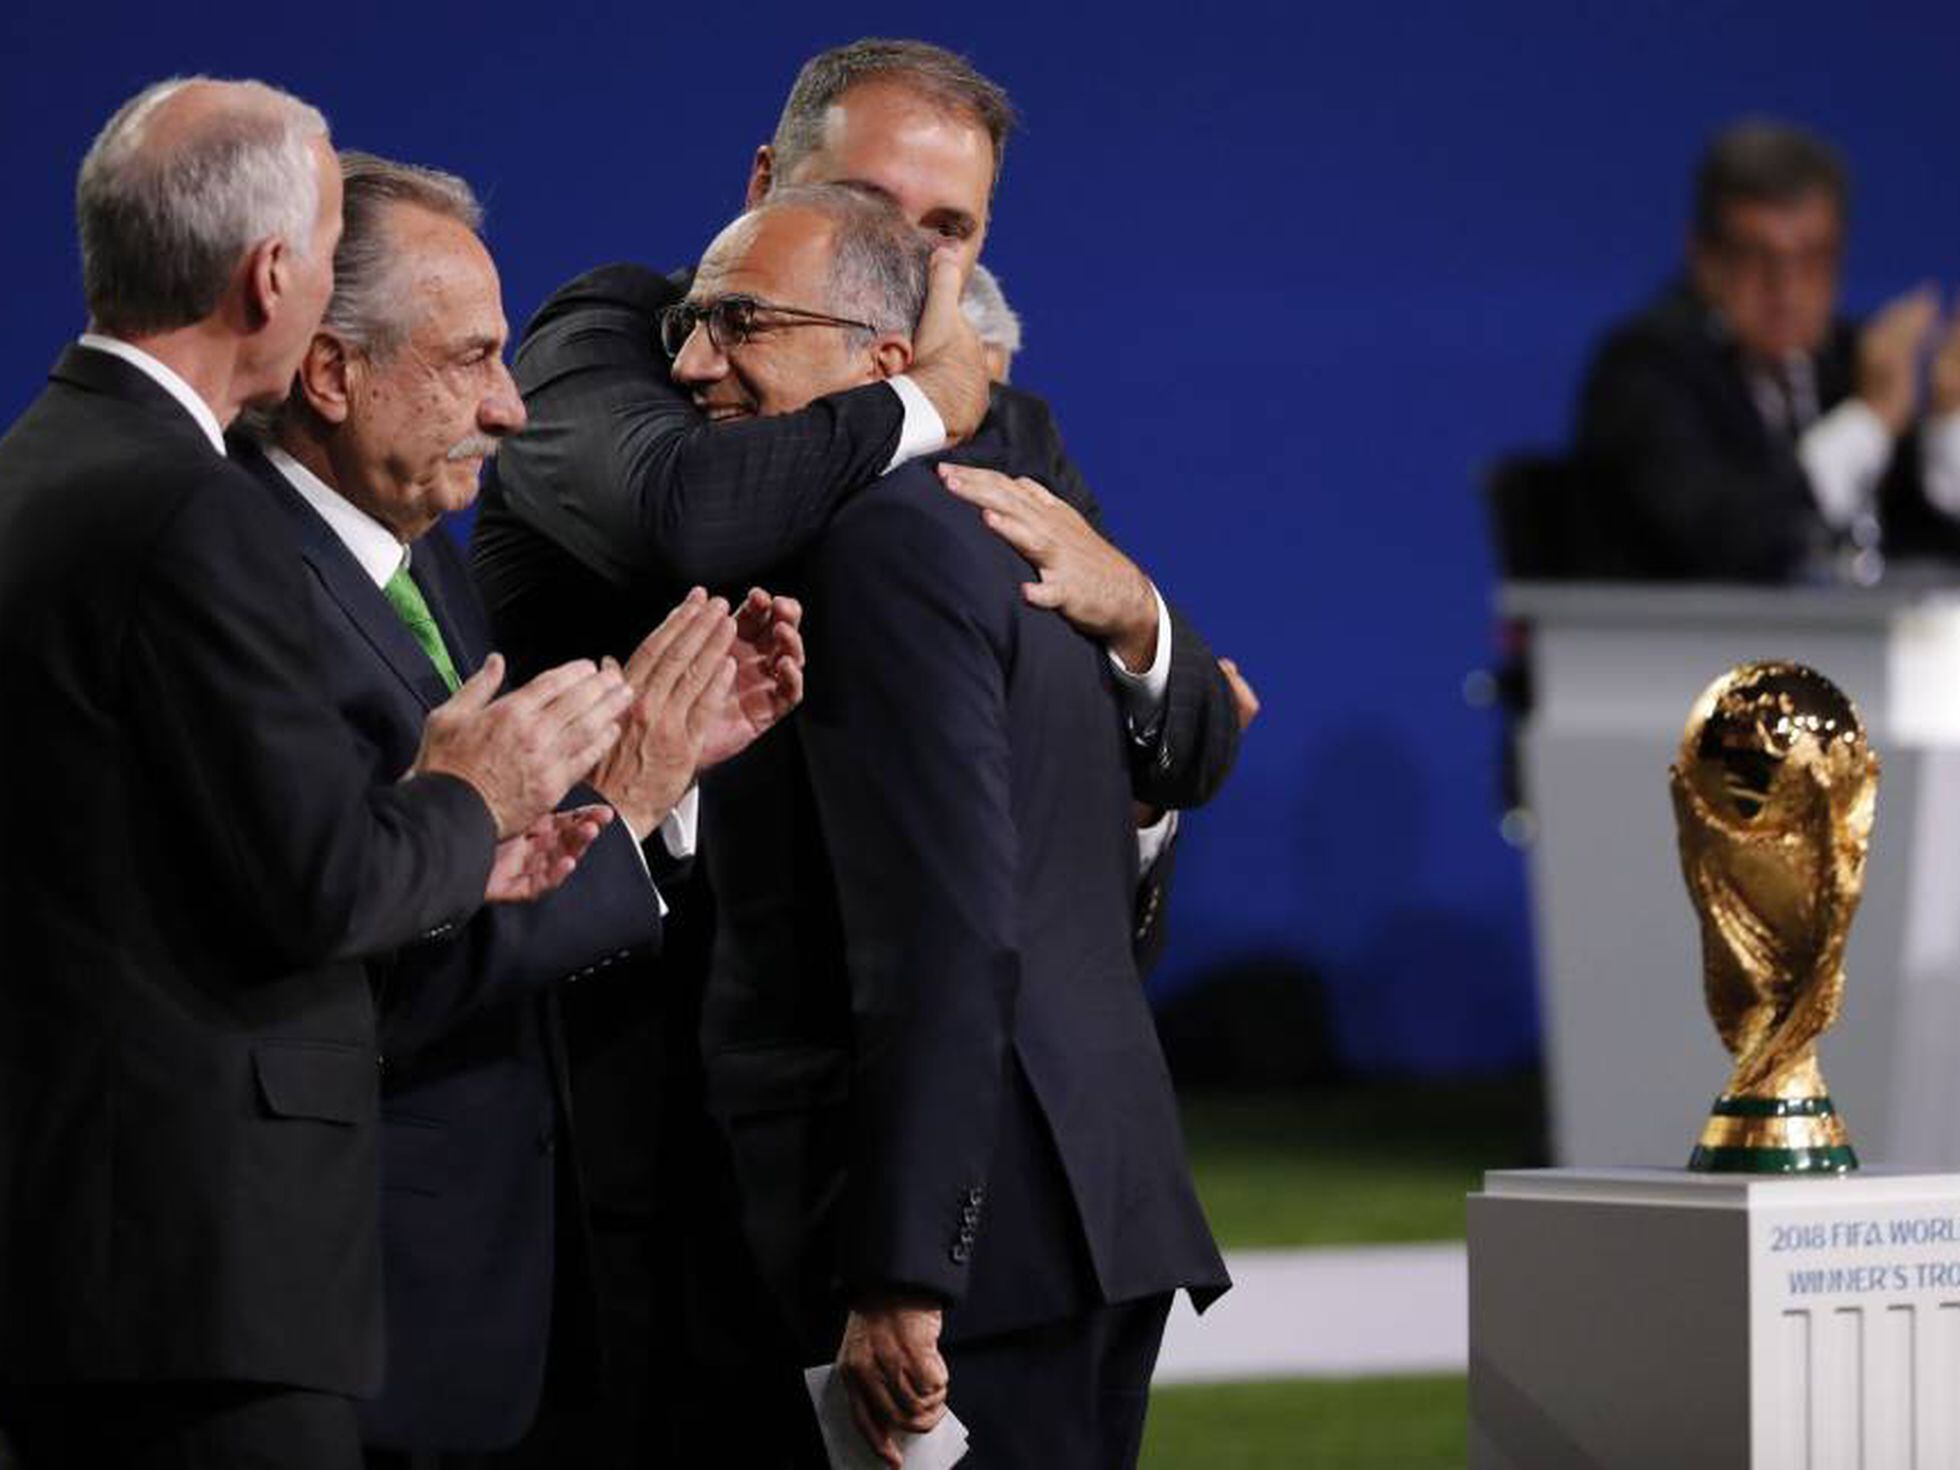 Boletim da Copa  Continente asiático fora da Copa do Mundo Catar